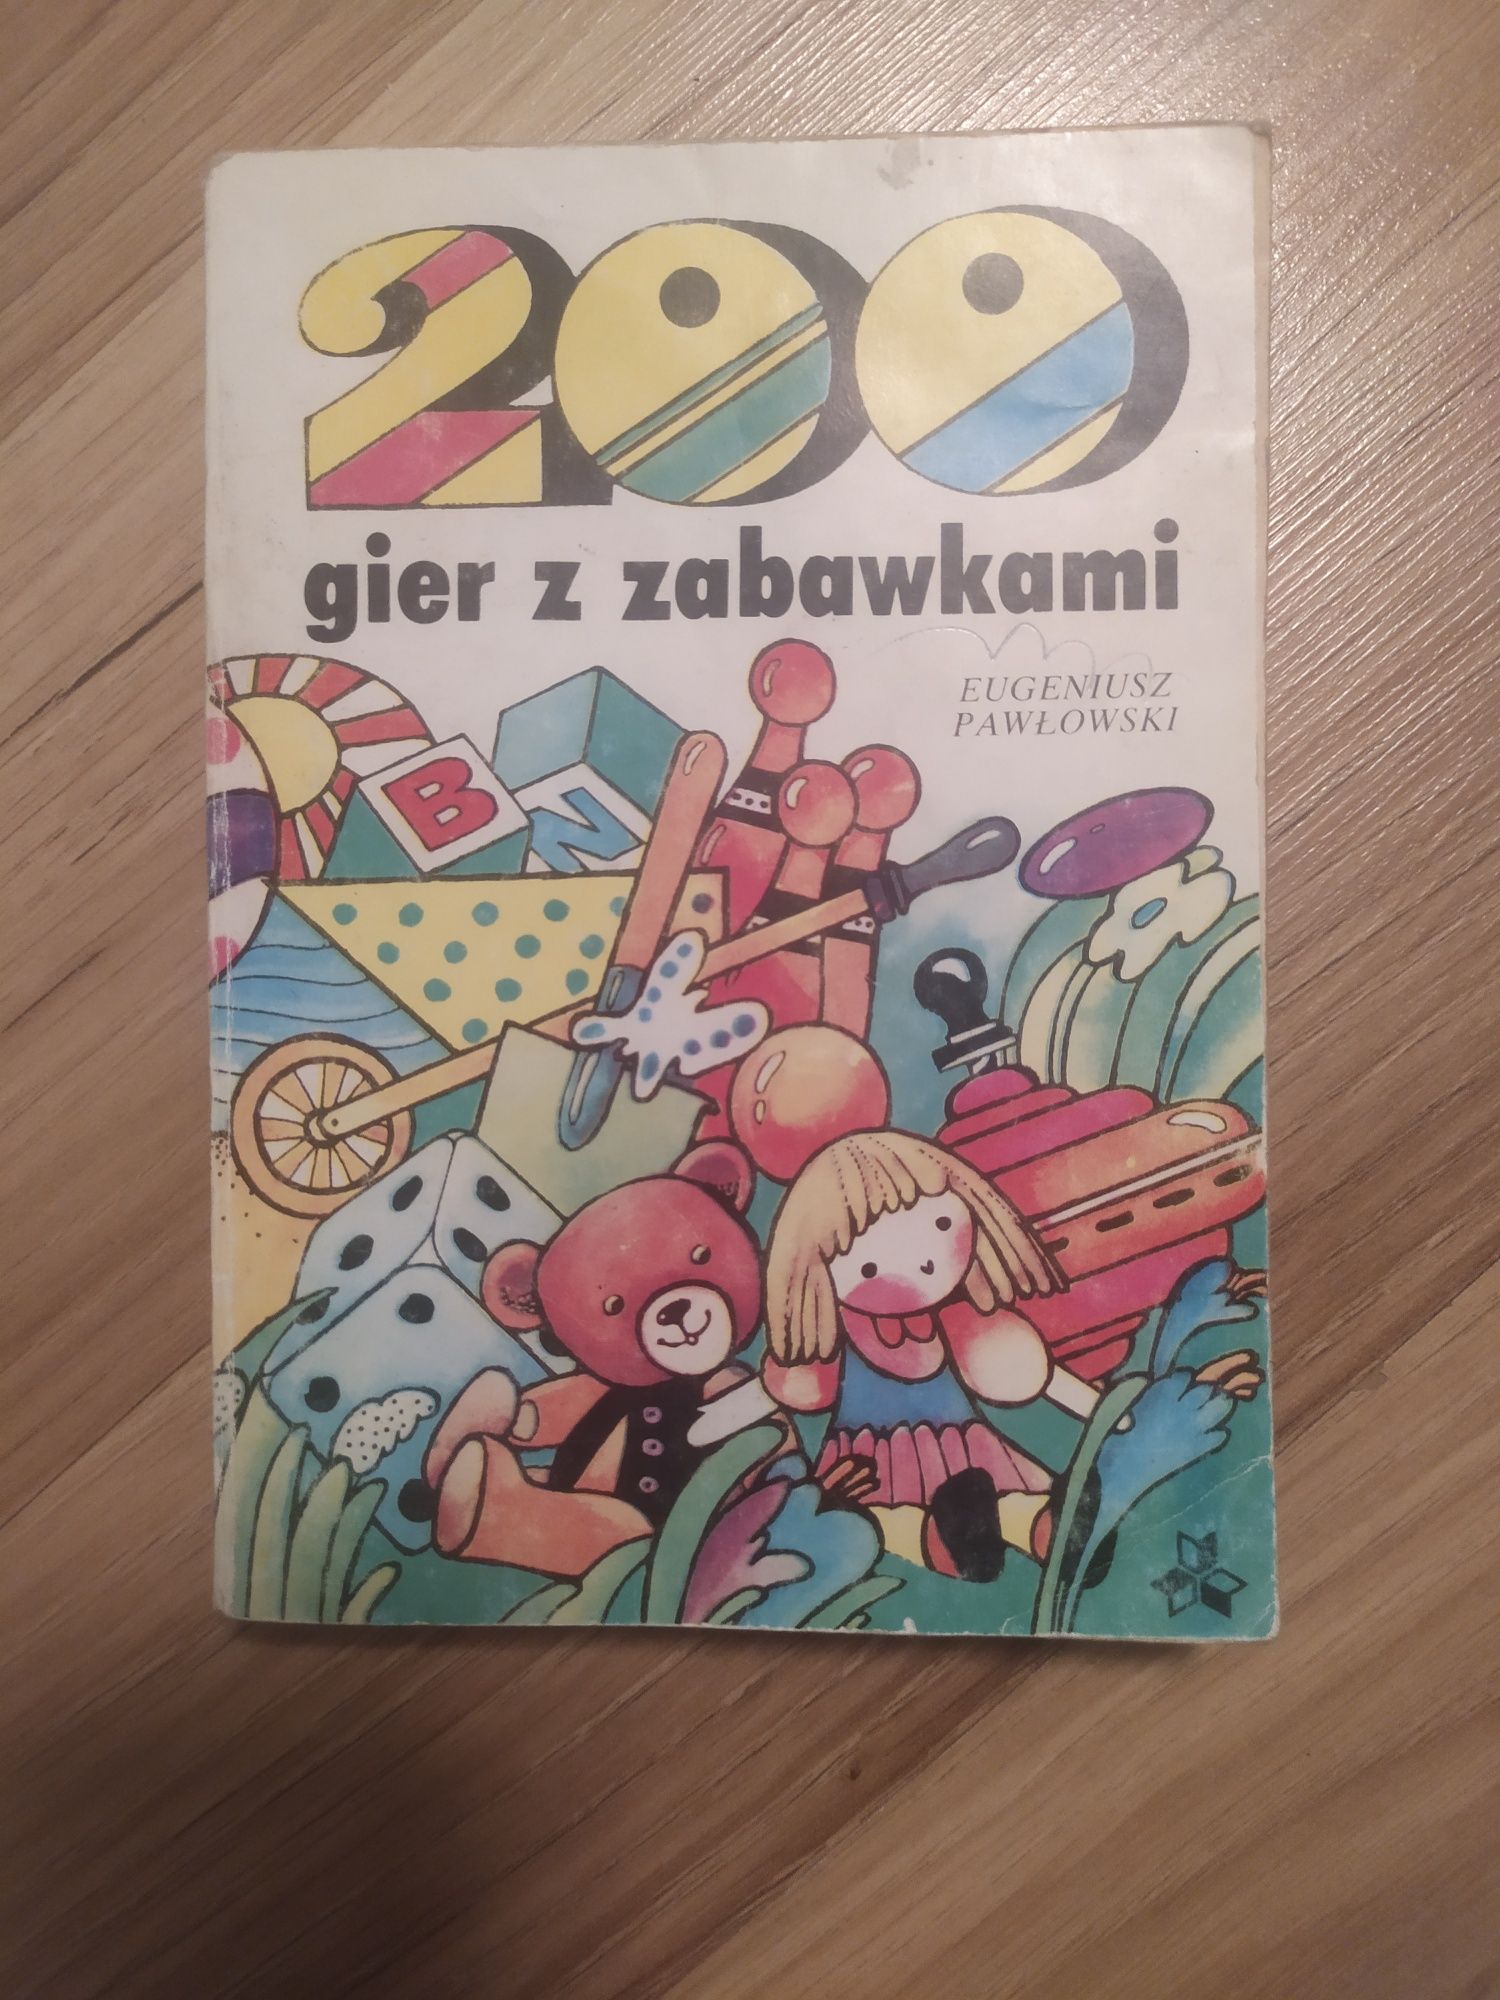 200 gier z zabawkami. E. Pawłowski